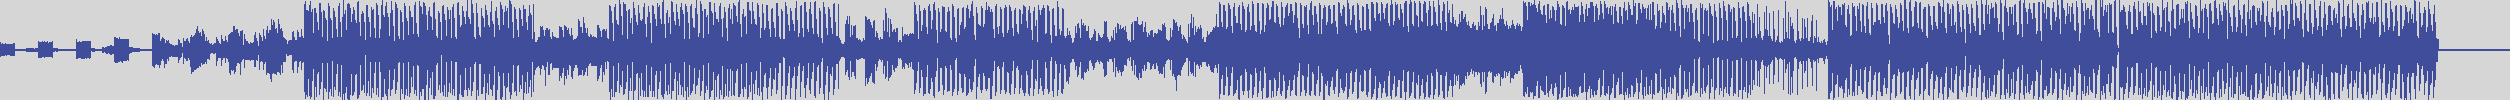 upr [UPR067] Jostronamer - Aphros [Original Mix] audio wave form